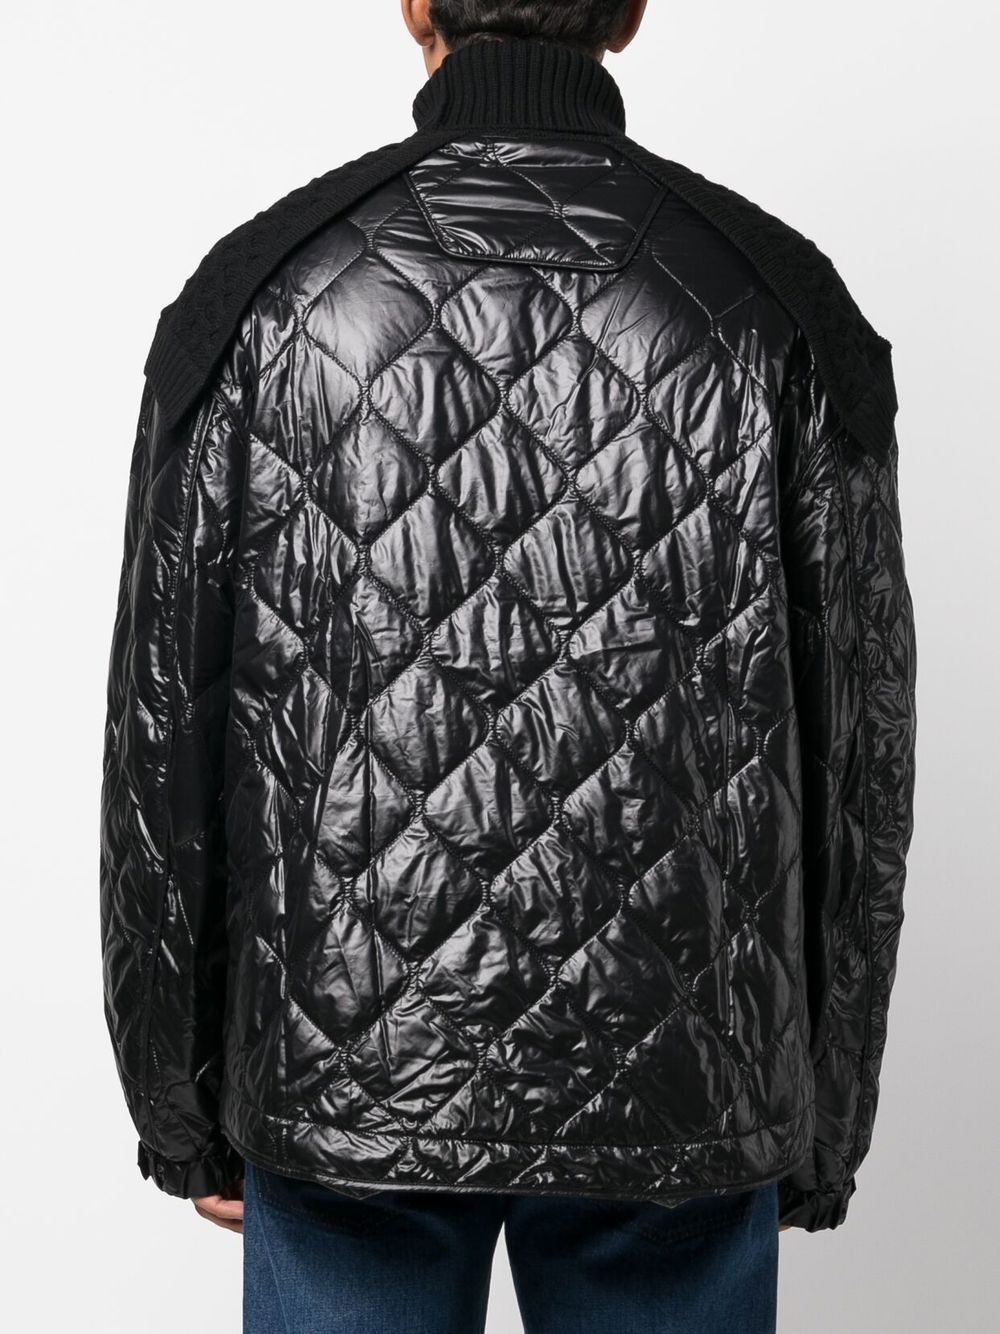 JUUN.J - Quilted-Sleeve Wool Roll-Neck Sweater | Black, buy at DOORS NYC